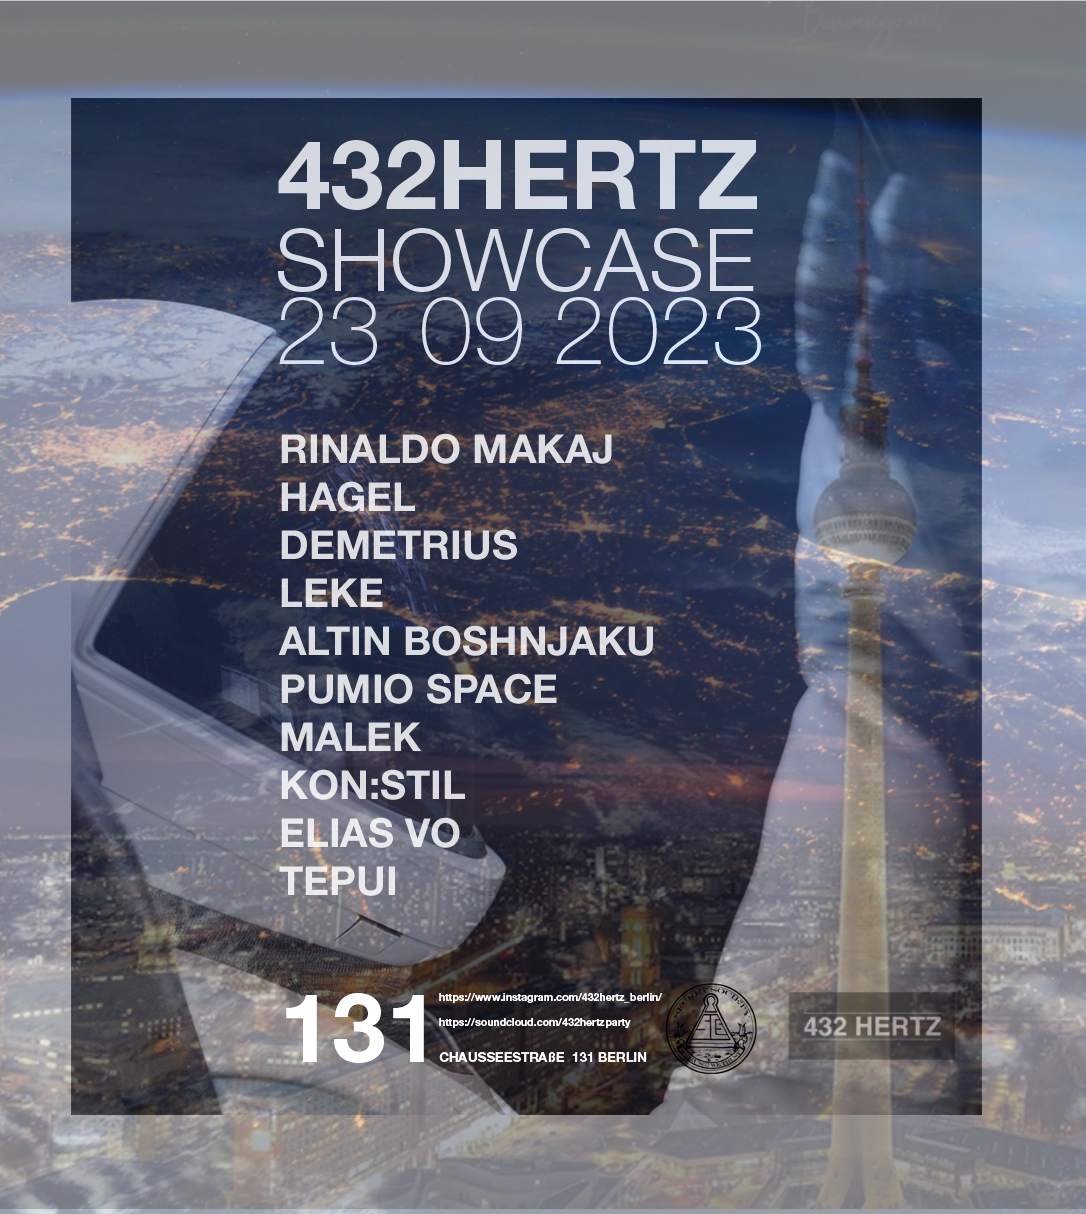 432HERTZ Showcase - フライヤー表